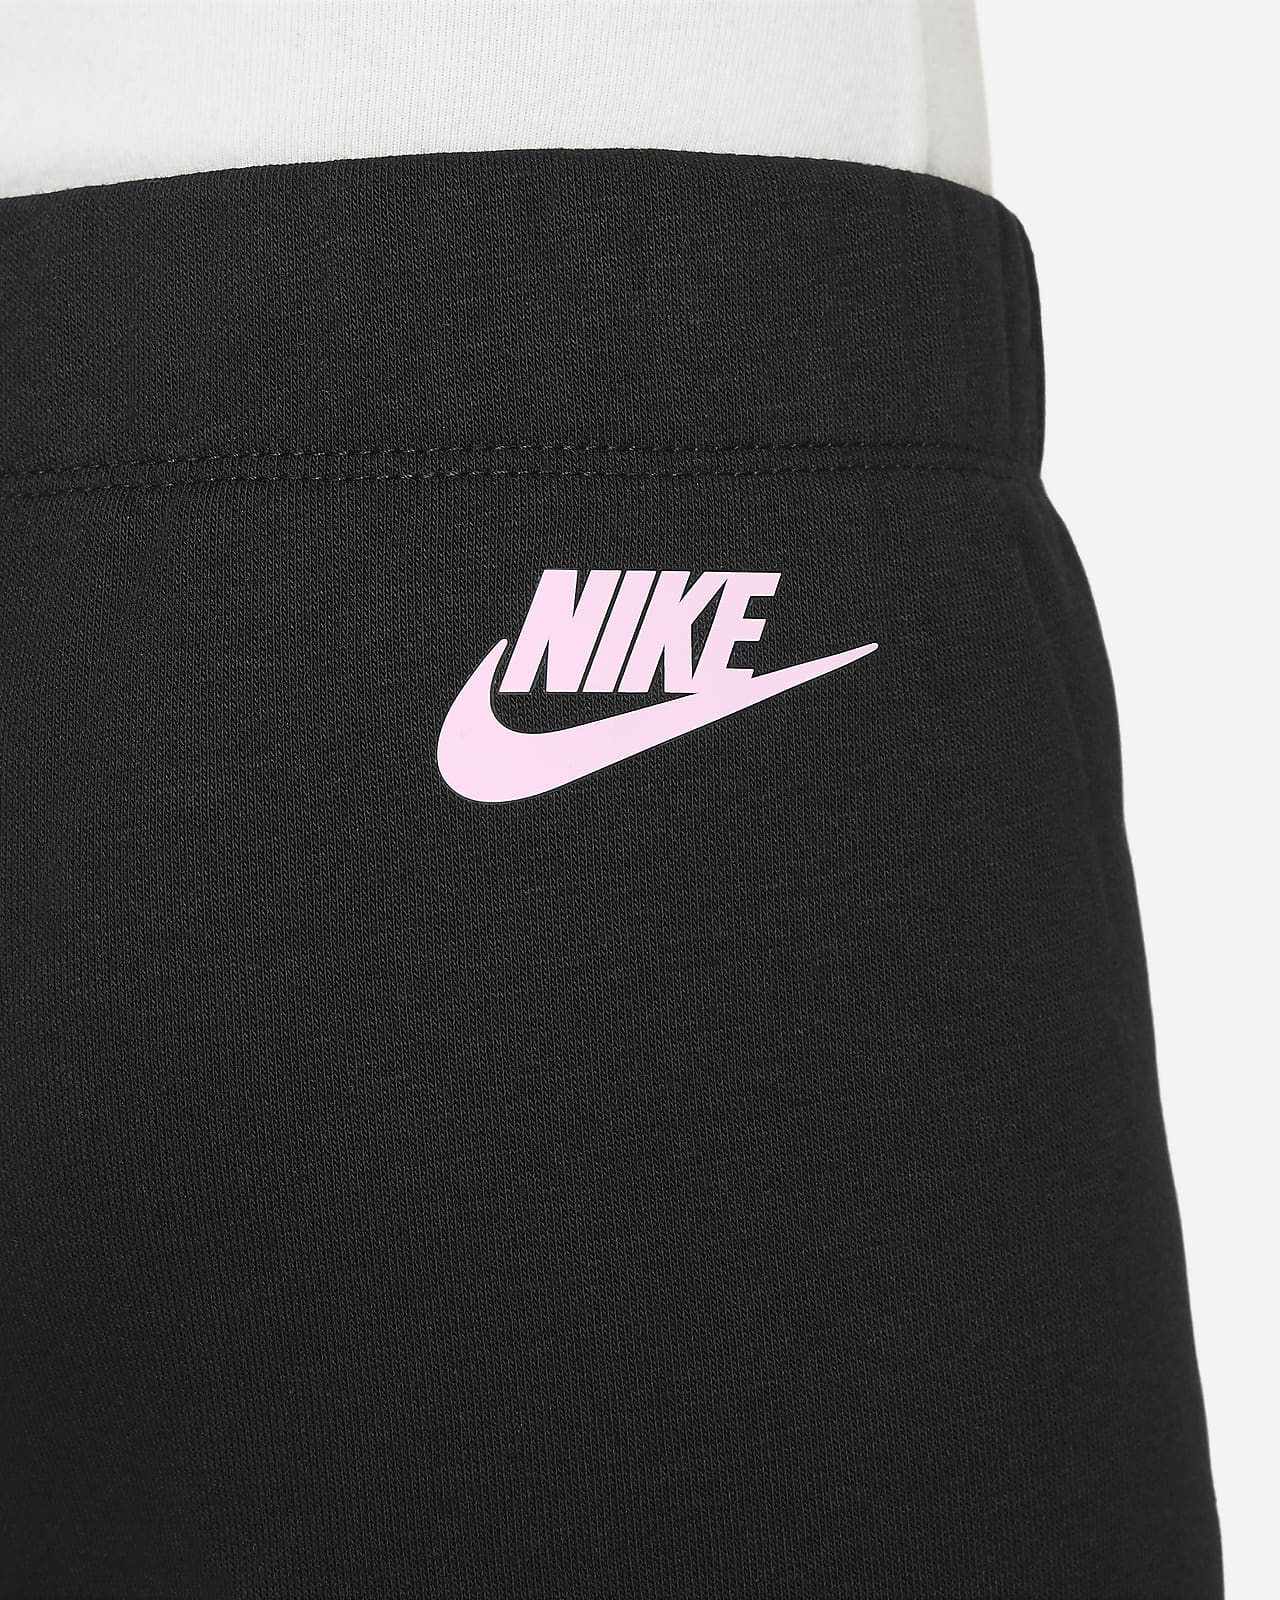 Buy Nike W NSW ESSNTL PANT TIGHT FLC - Grey